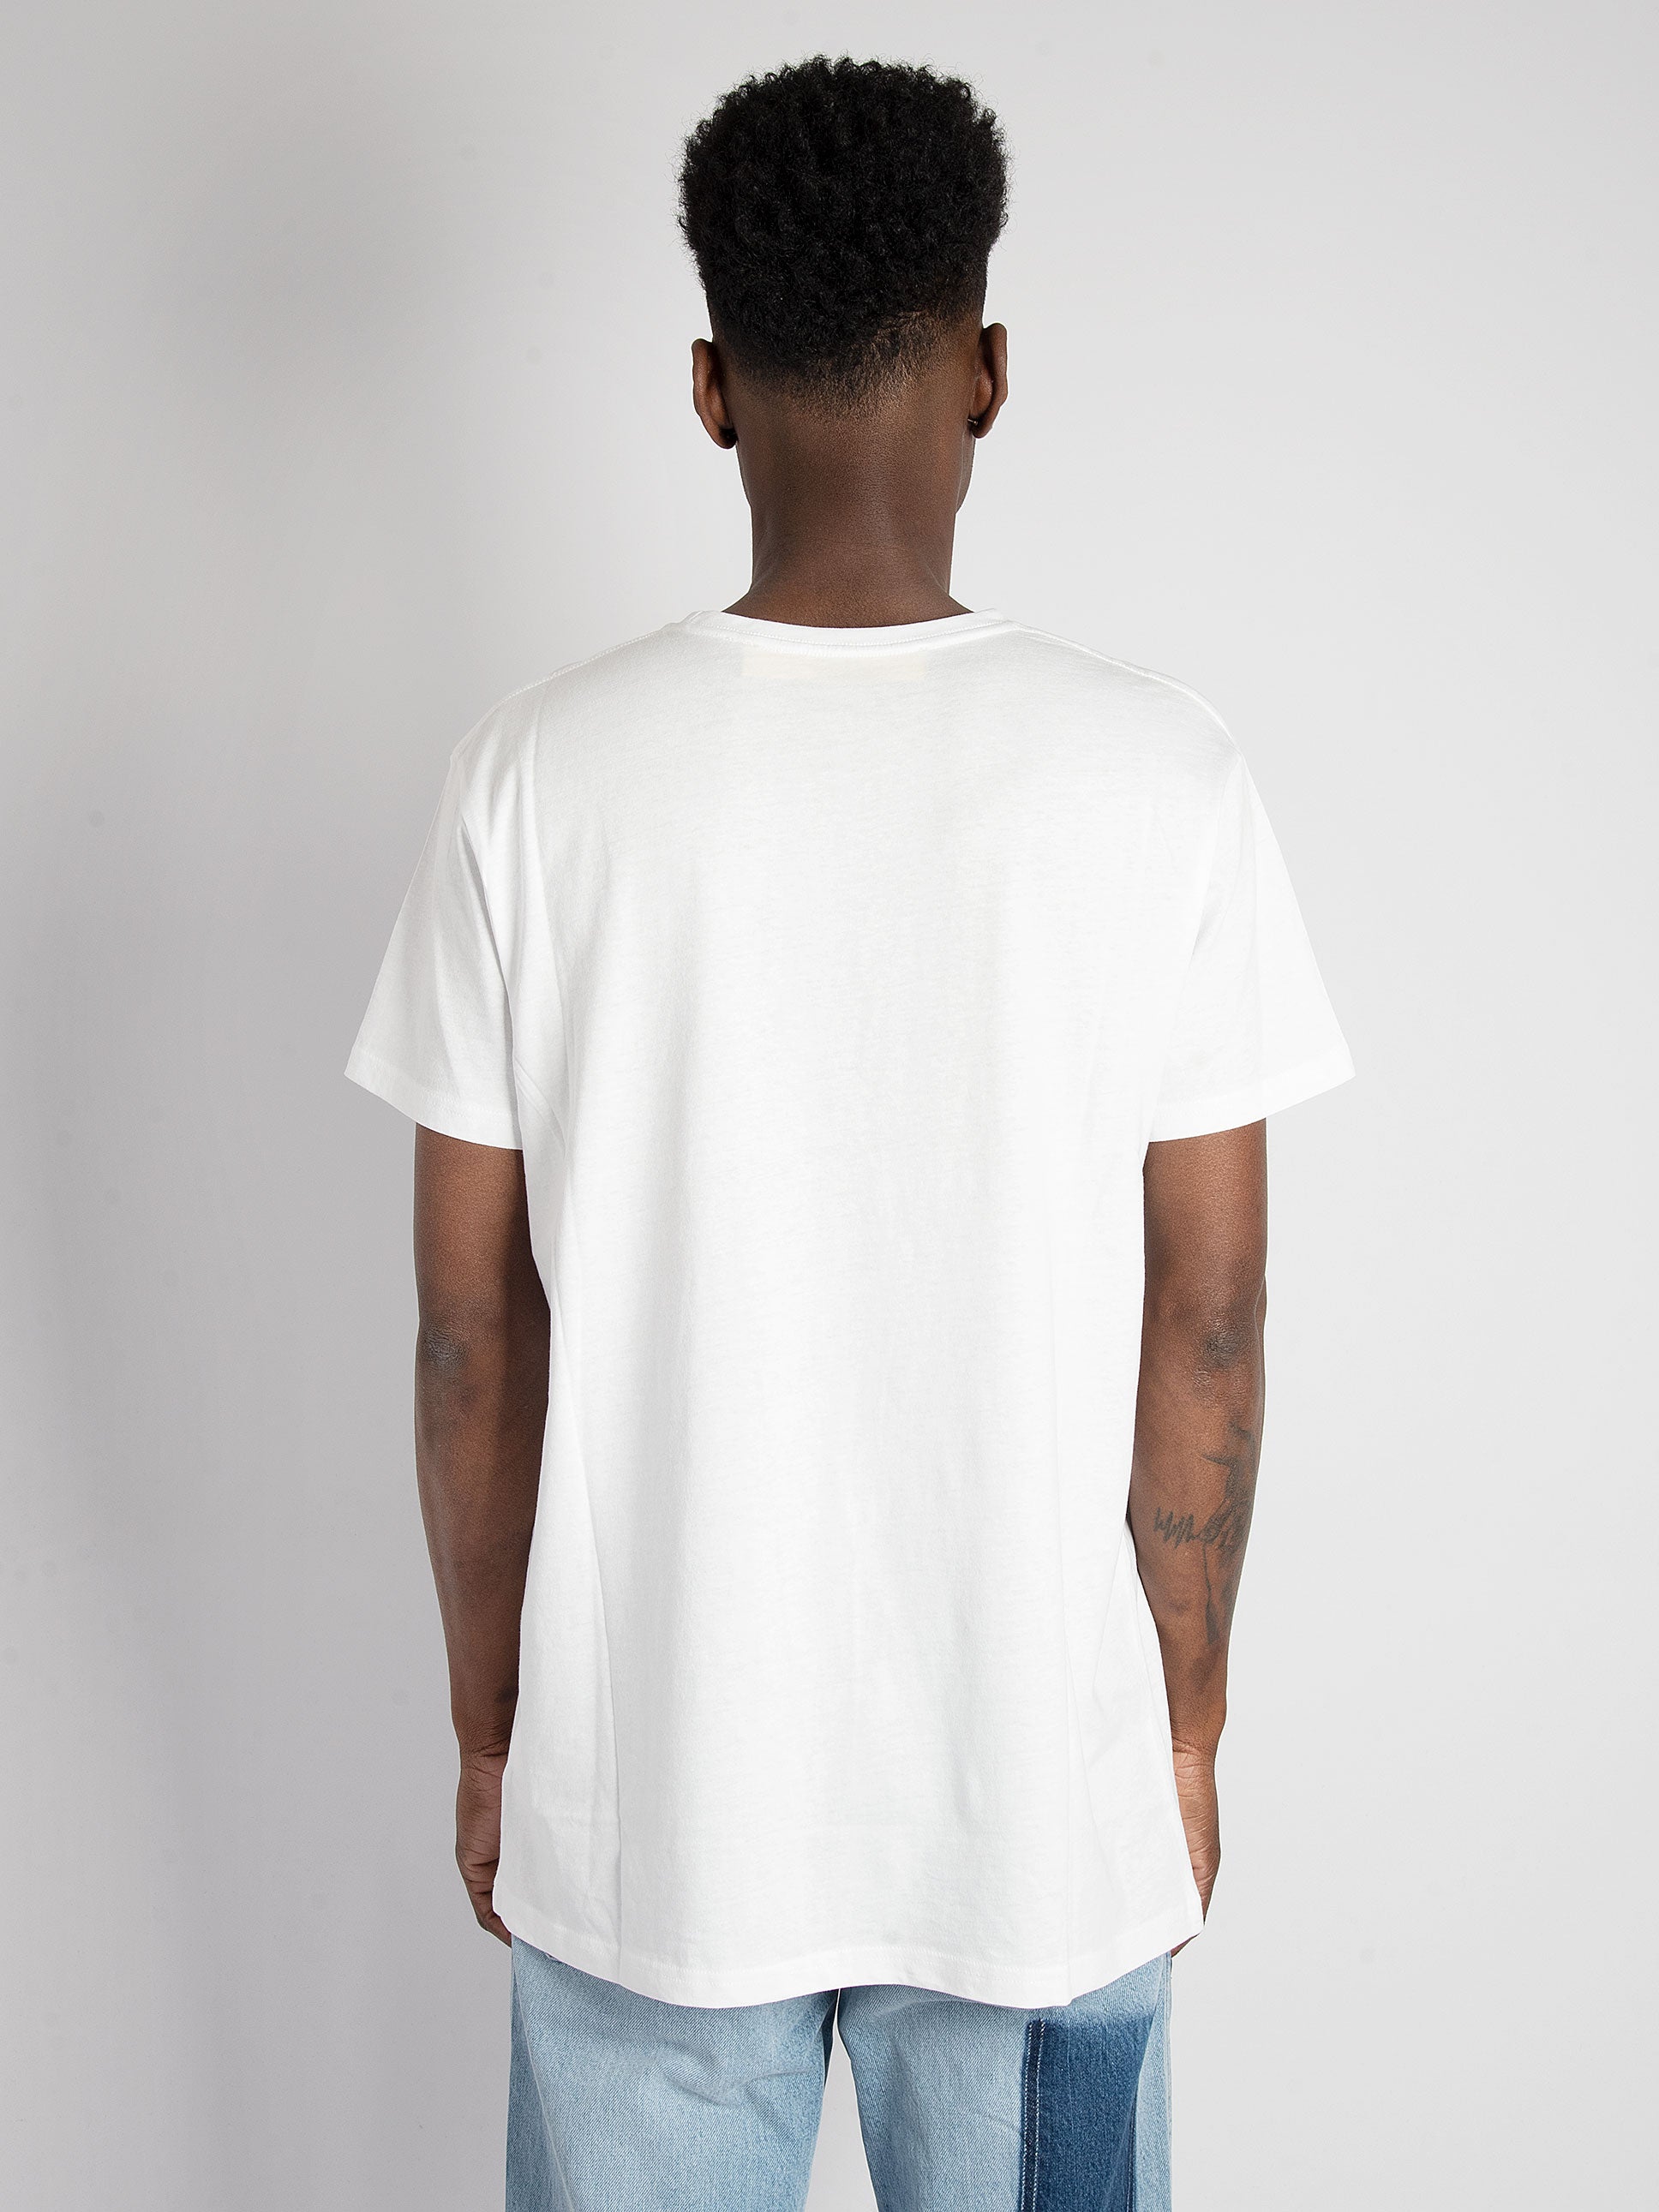 T-Shirt Inspire Heart- Bianco/Viola